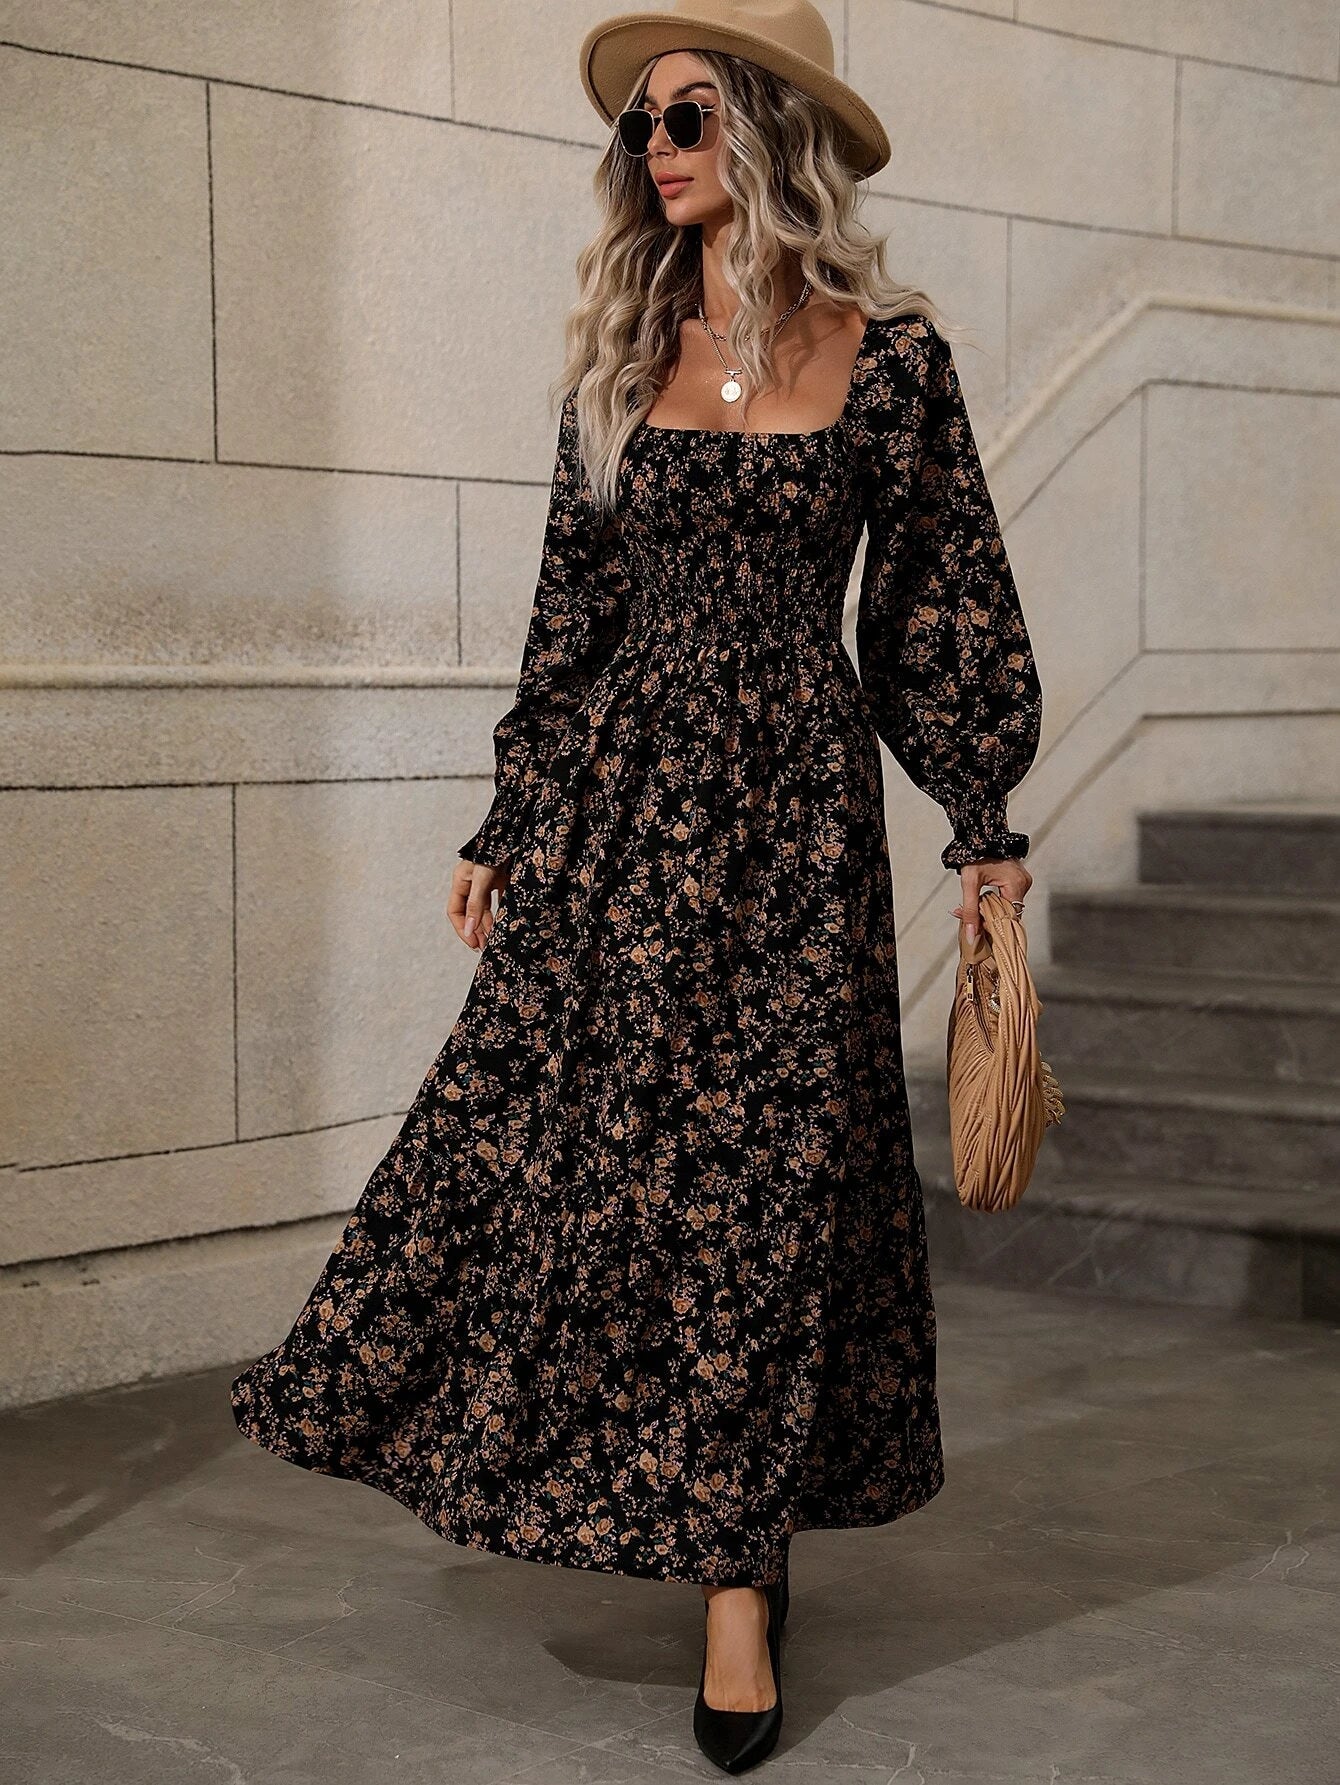  | SHEIN Allover Floral Print Square Neck Bishop Sleeve Dress | Dress | Shein | OneHub